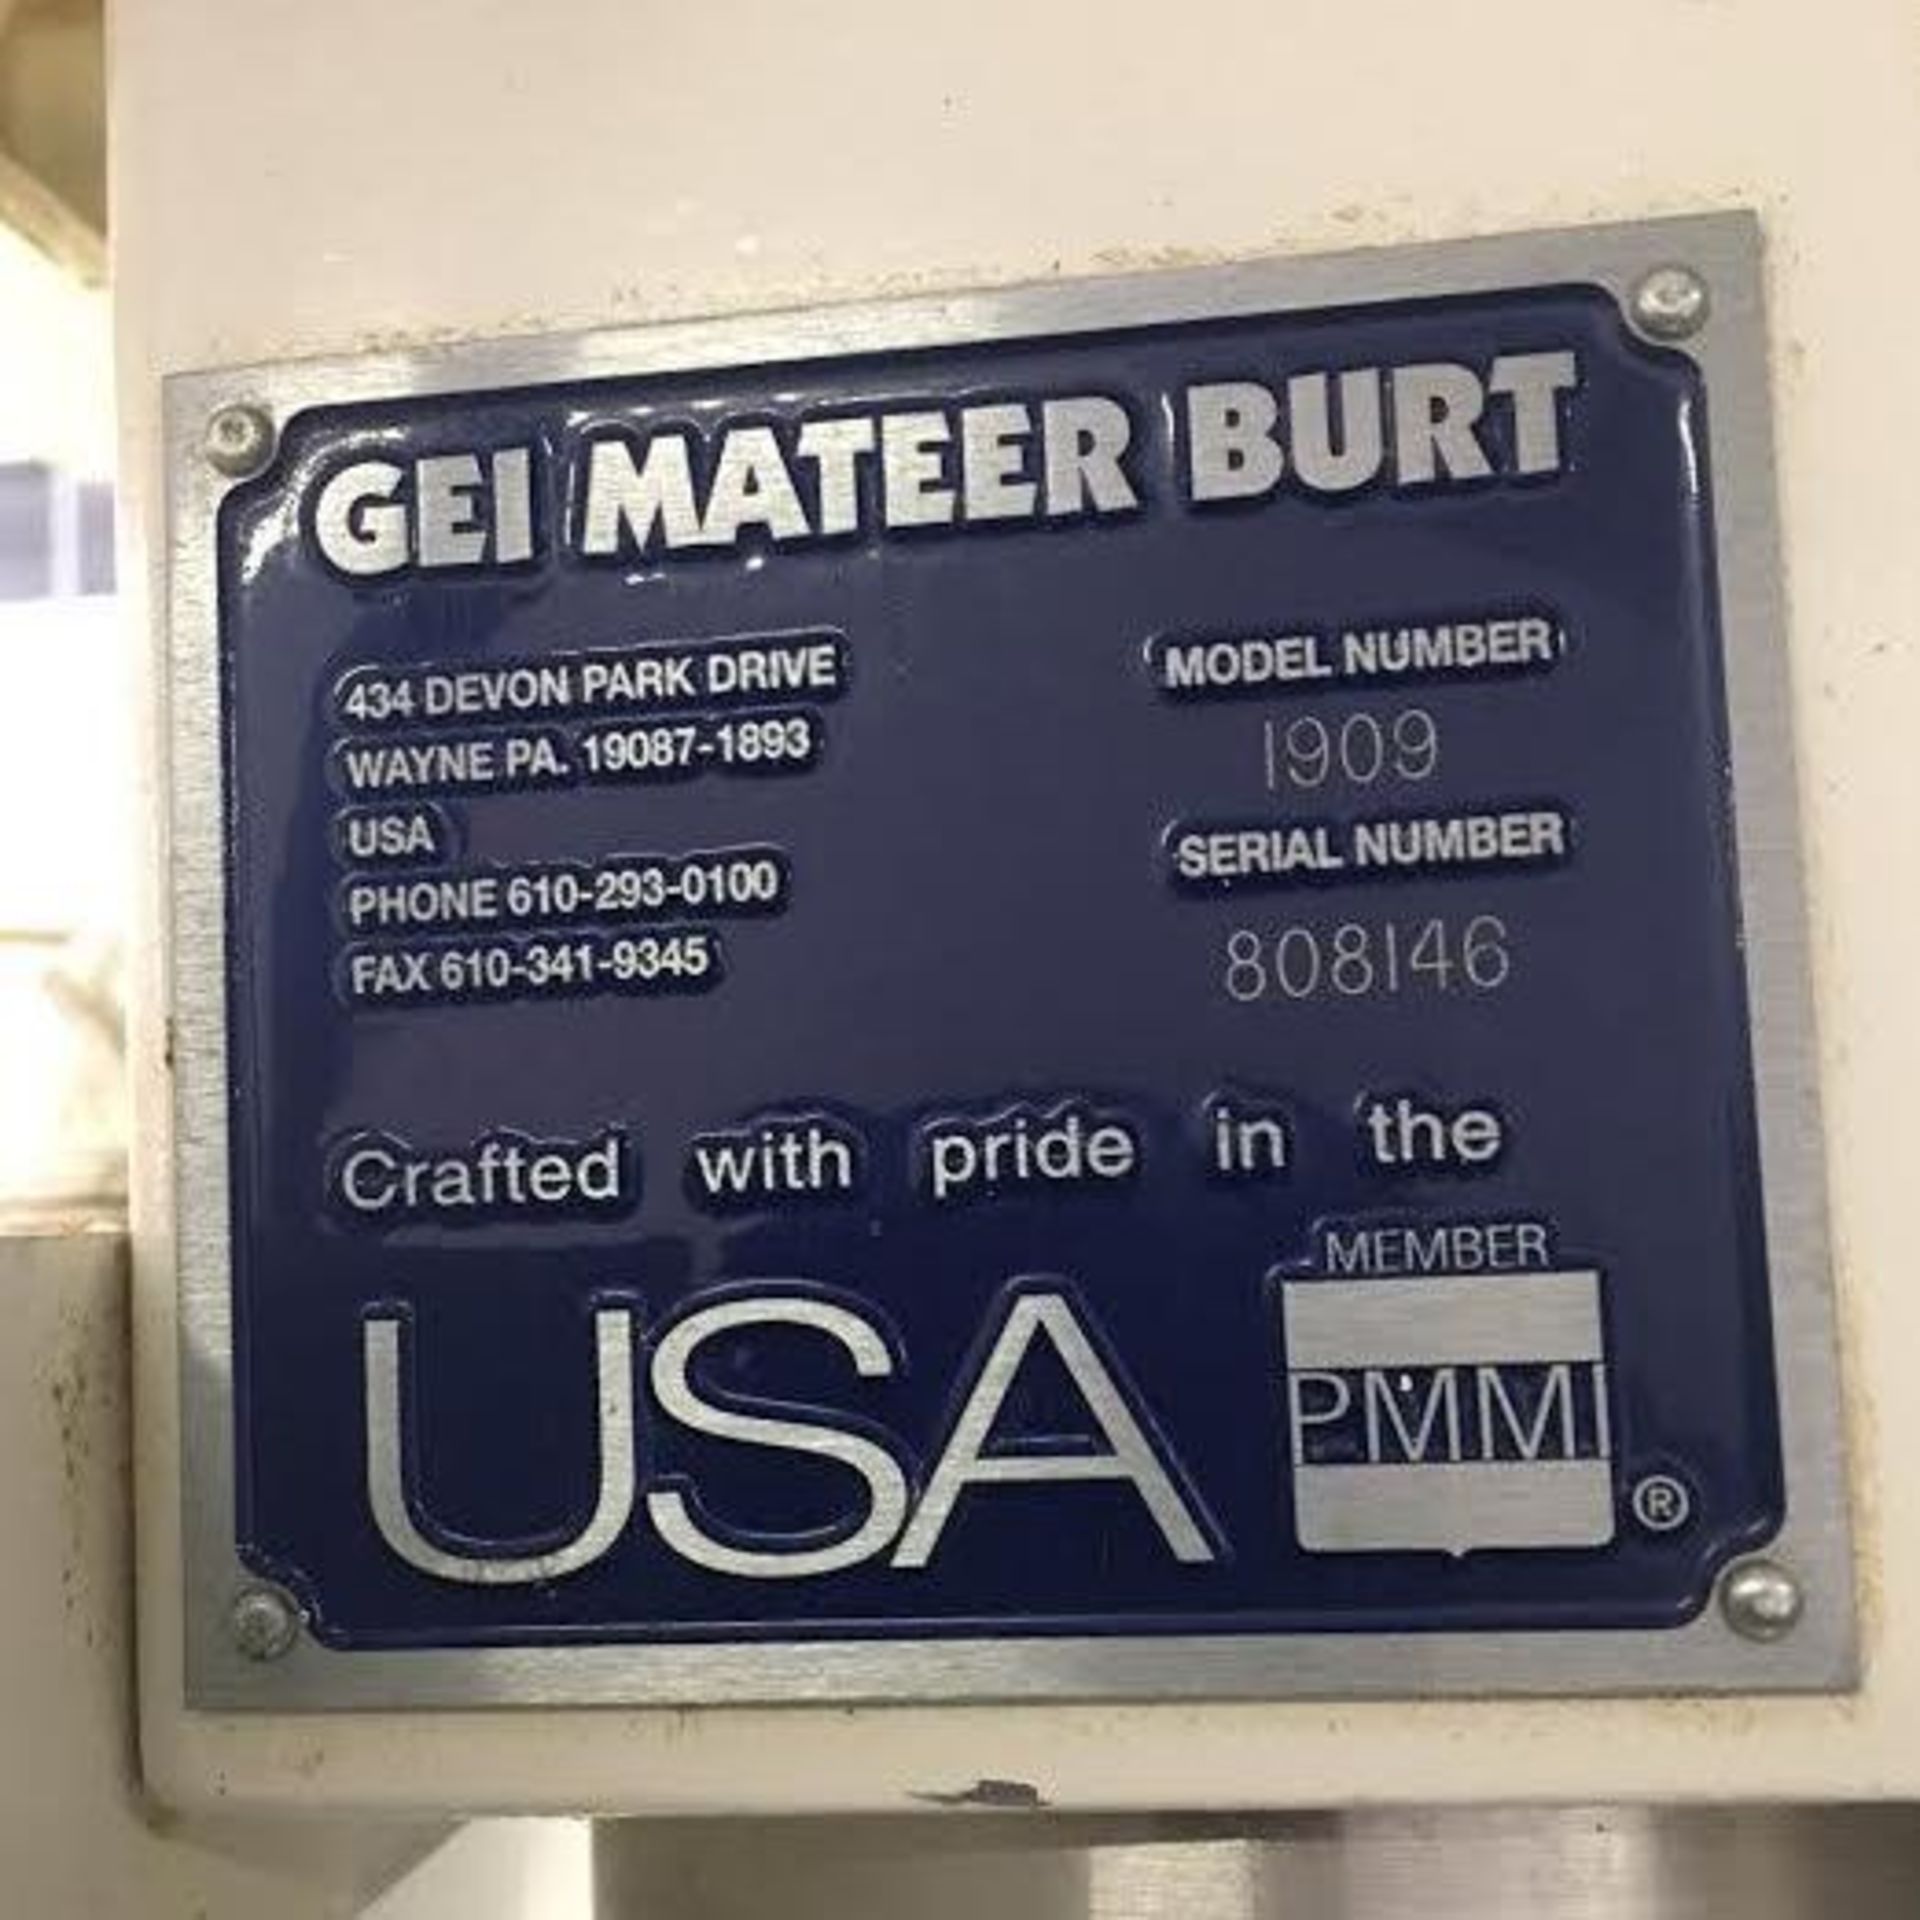 Gei Mateer Burt Single Head Powder Filler - Image 6 of 8